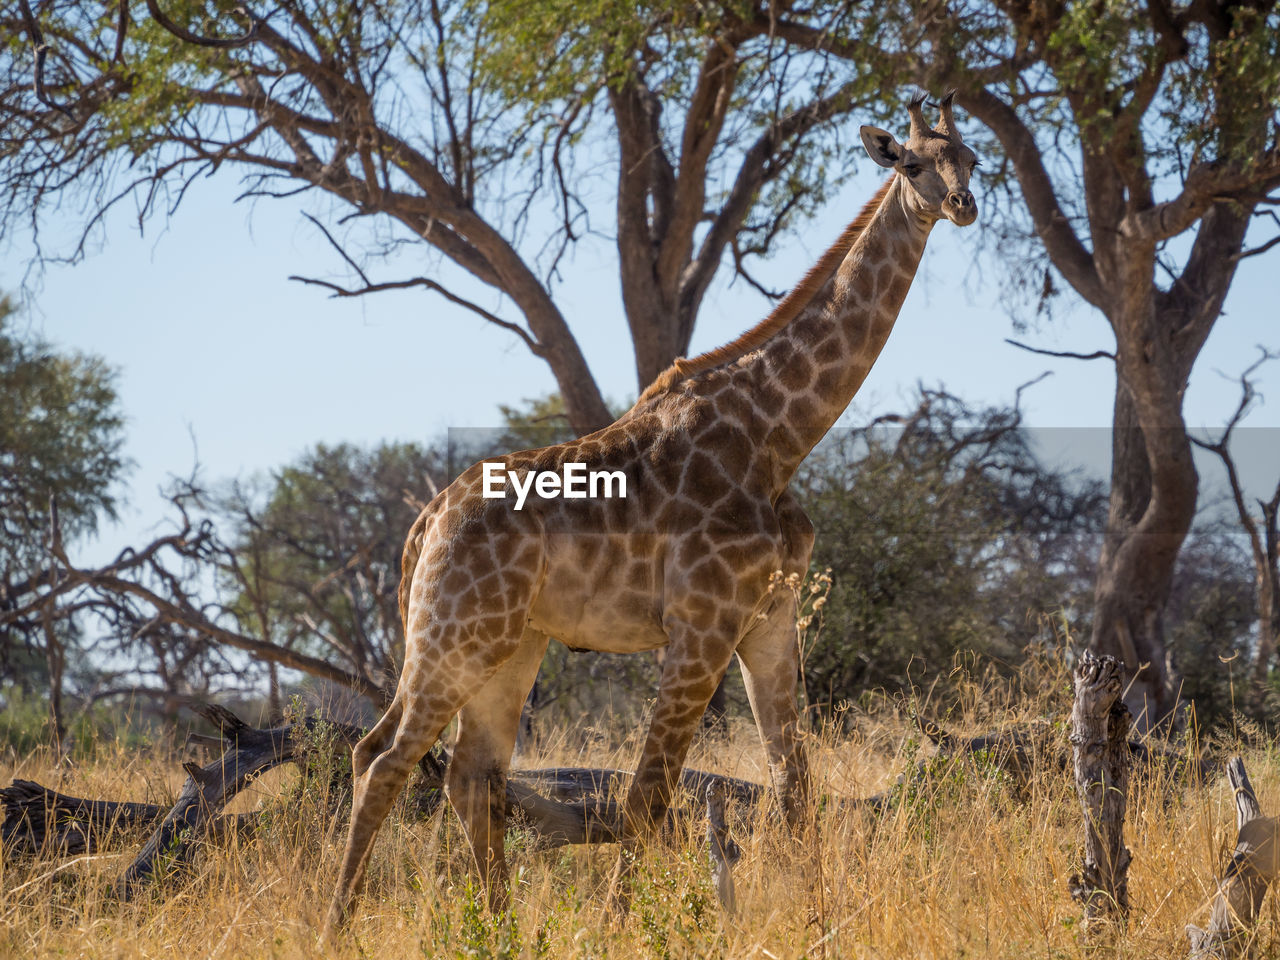 Giraffe walking on field against trees, moremi game reserve, botswana